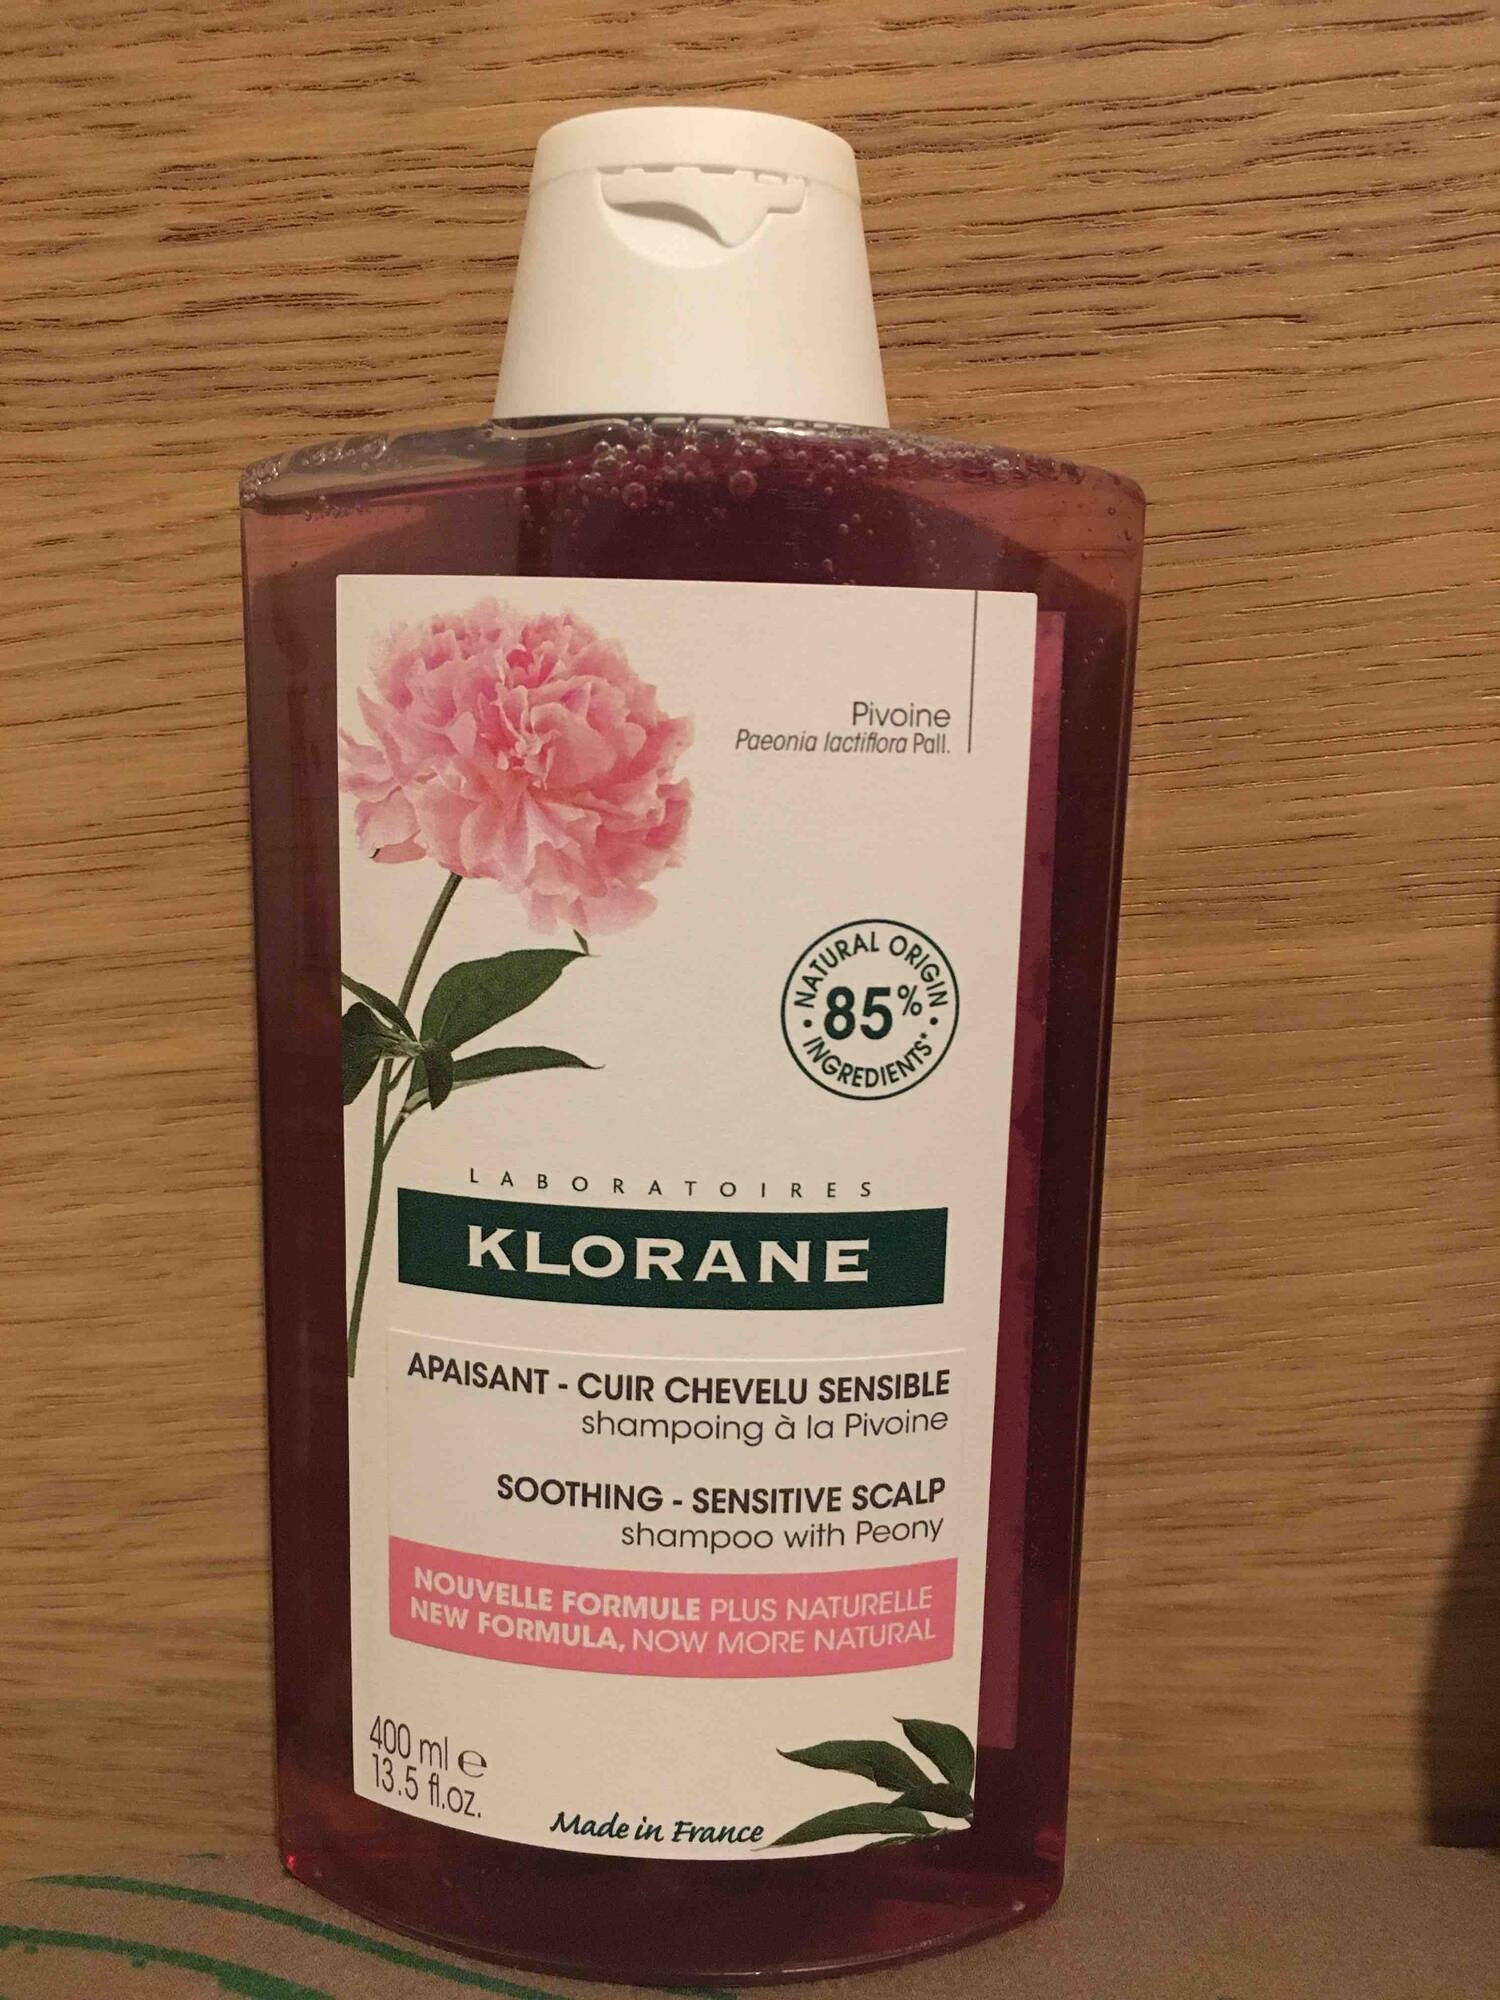 KLORANE - Apaisant cuir chevelu sensible - Shampooing à la pivoine